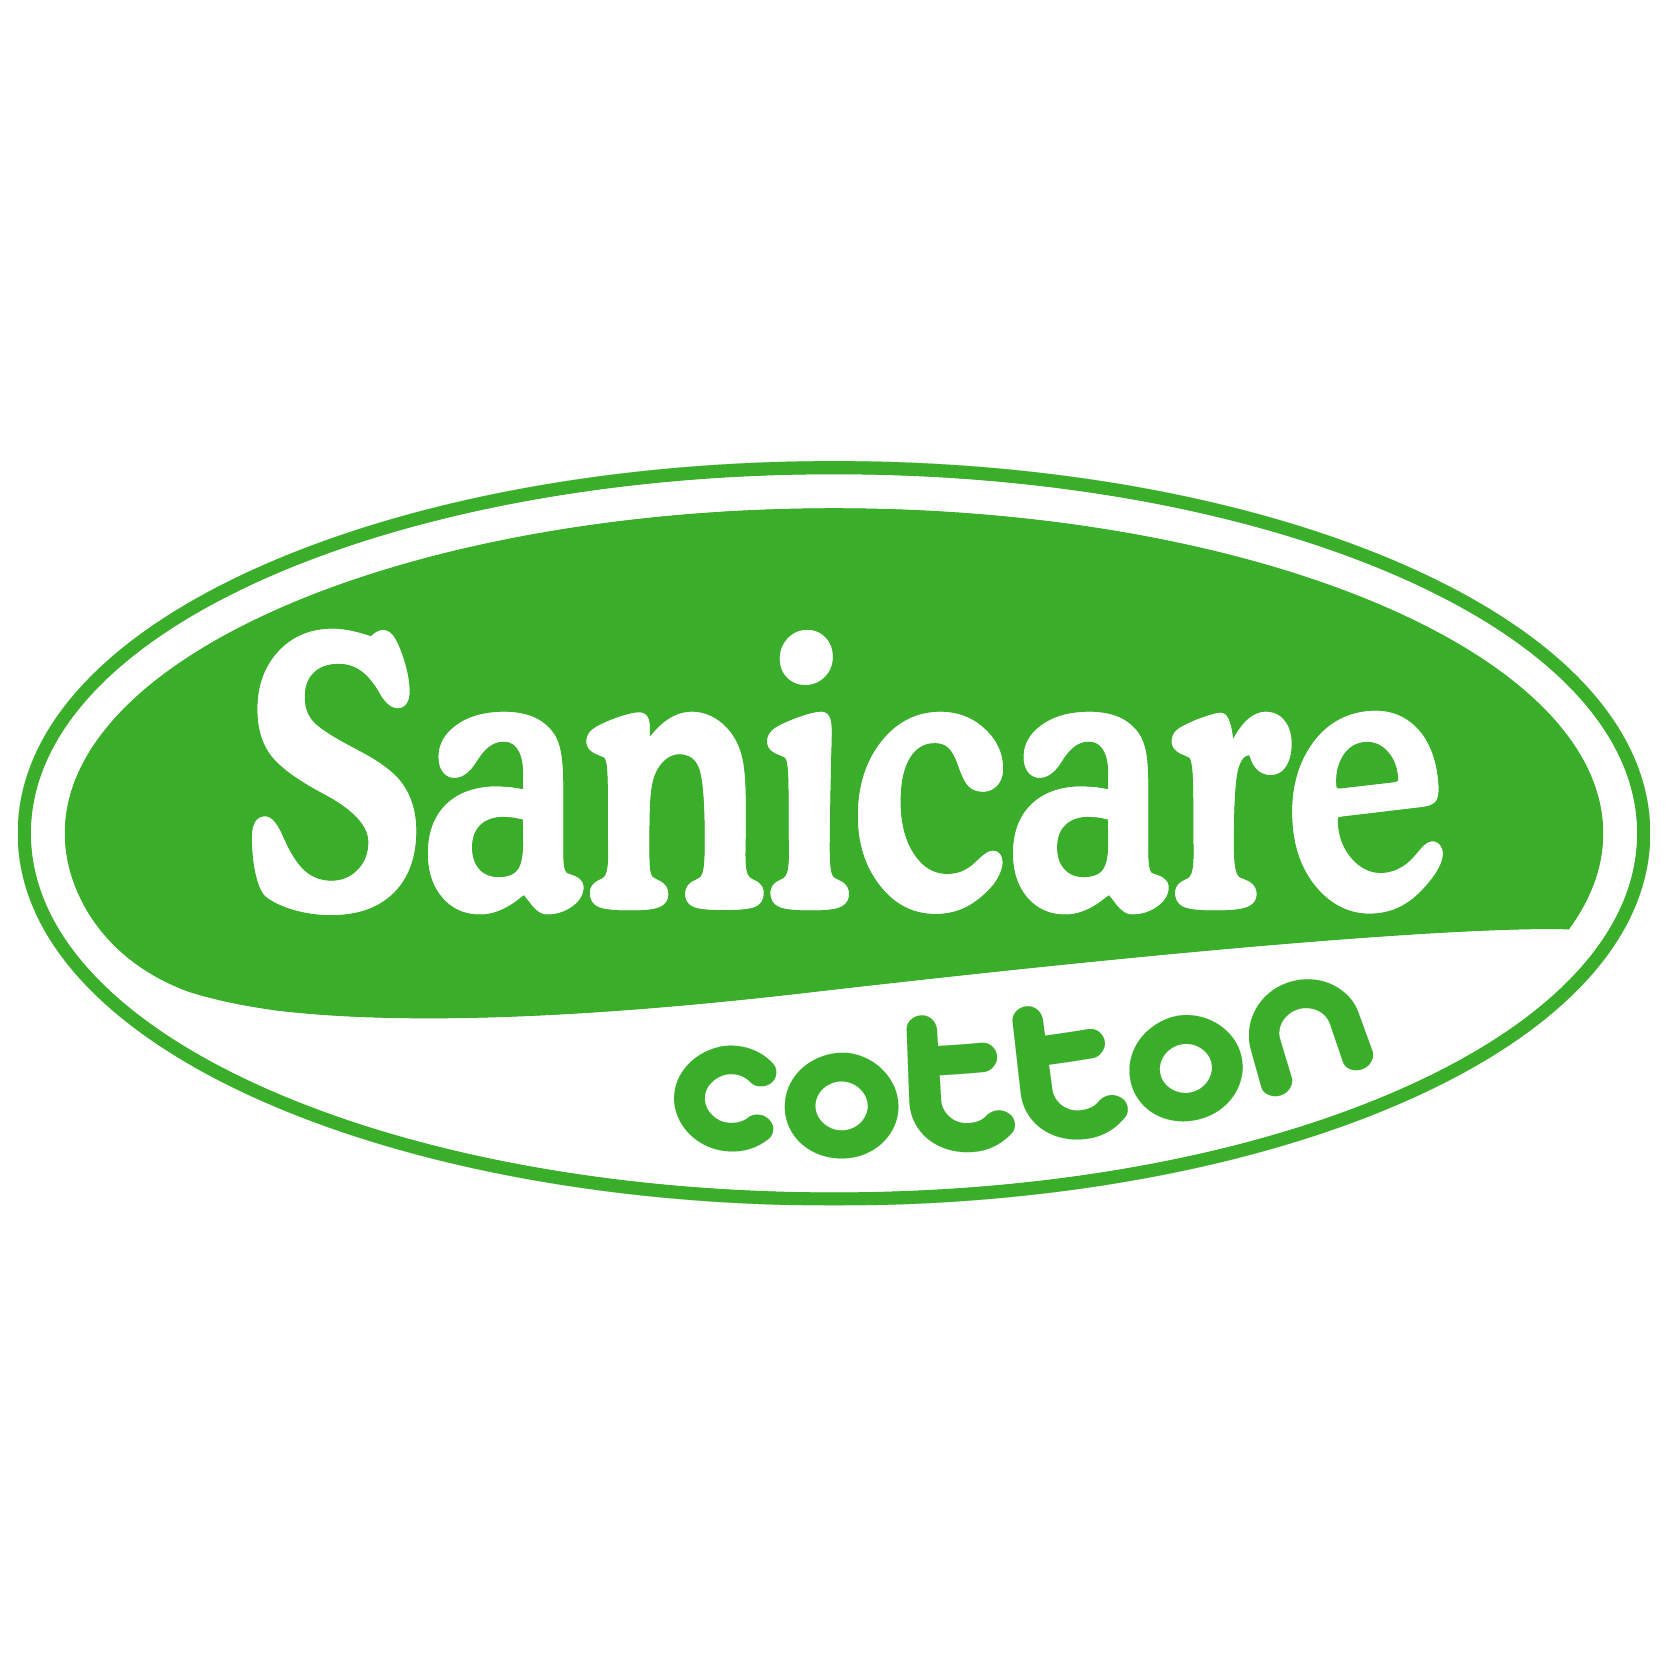 Sanicare Mini Cotton Balls 50 Balls (Pack of 3)